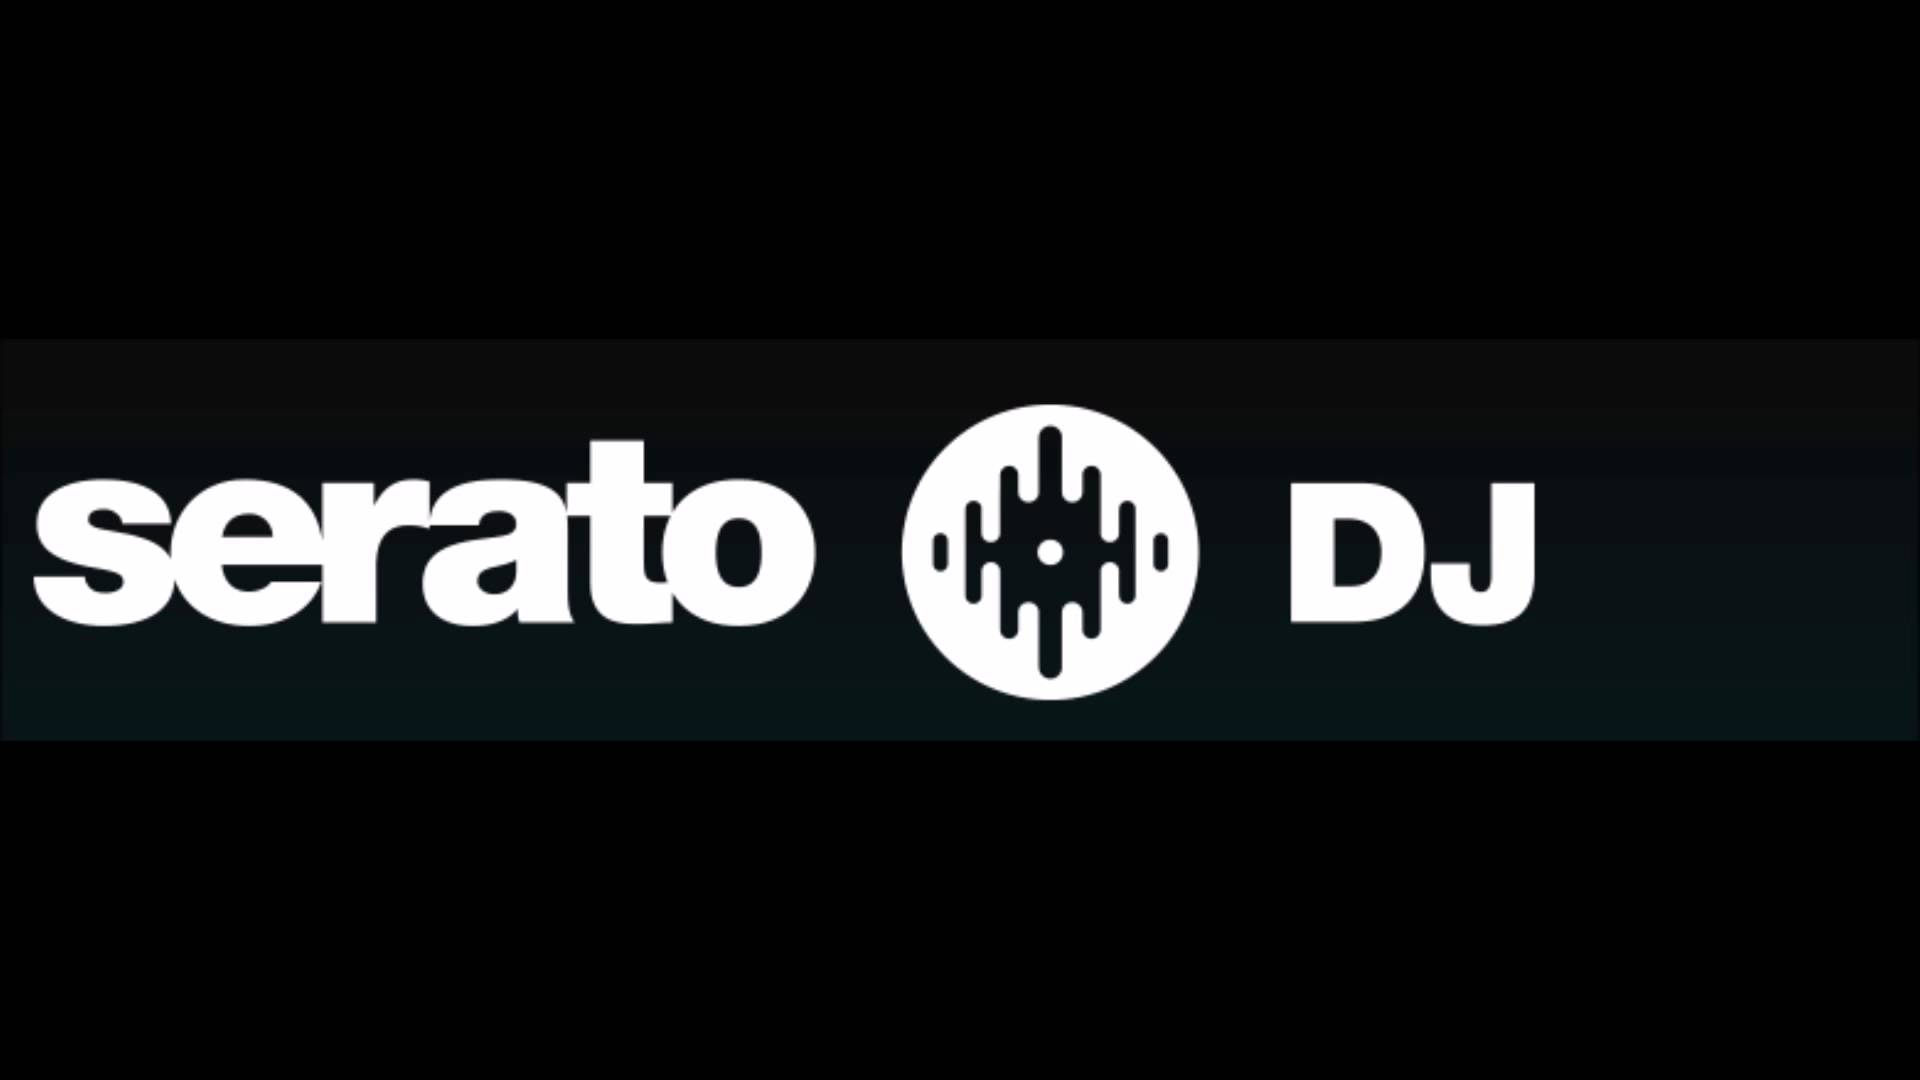 serato dj pro crack free download